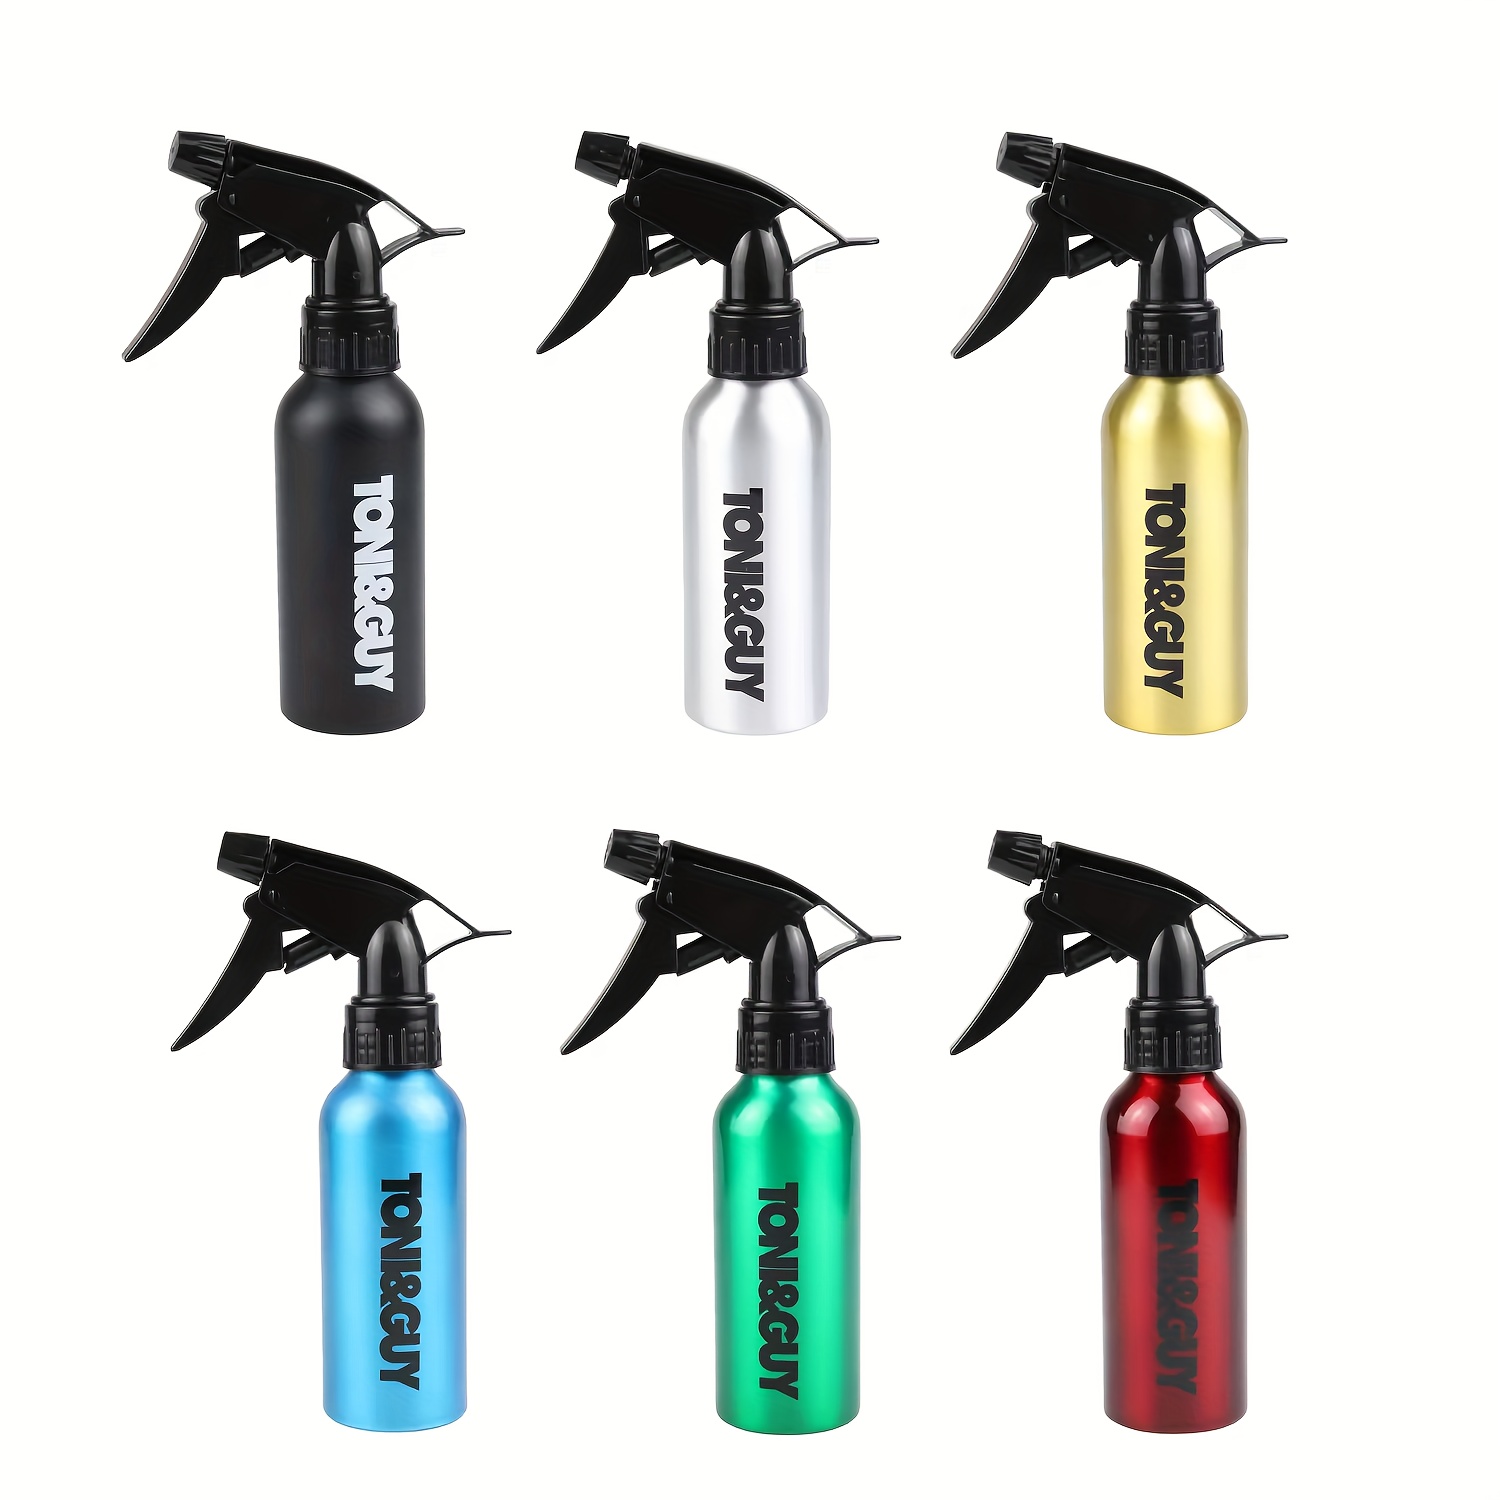 

1pc Aluminum Spray Bottle, Fine Mist Sprayer, High Pressure Atomizing For Salon, Cleaning, Gardening, Multipurpose Use